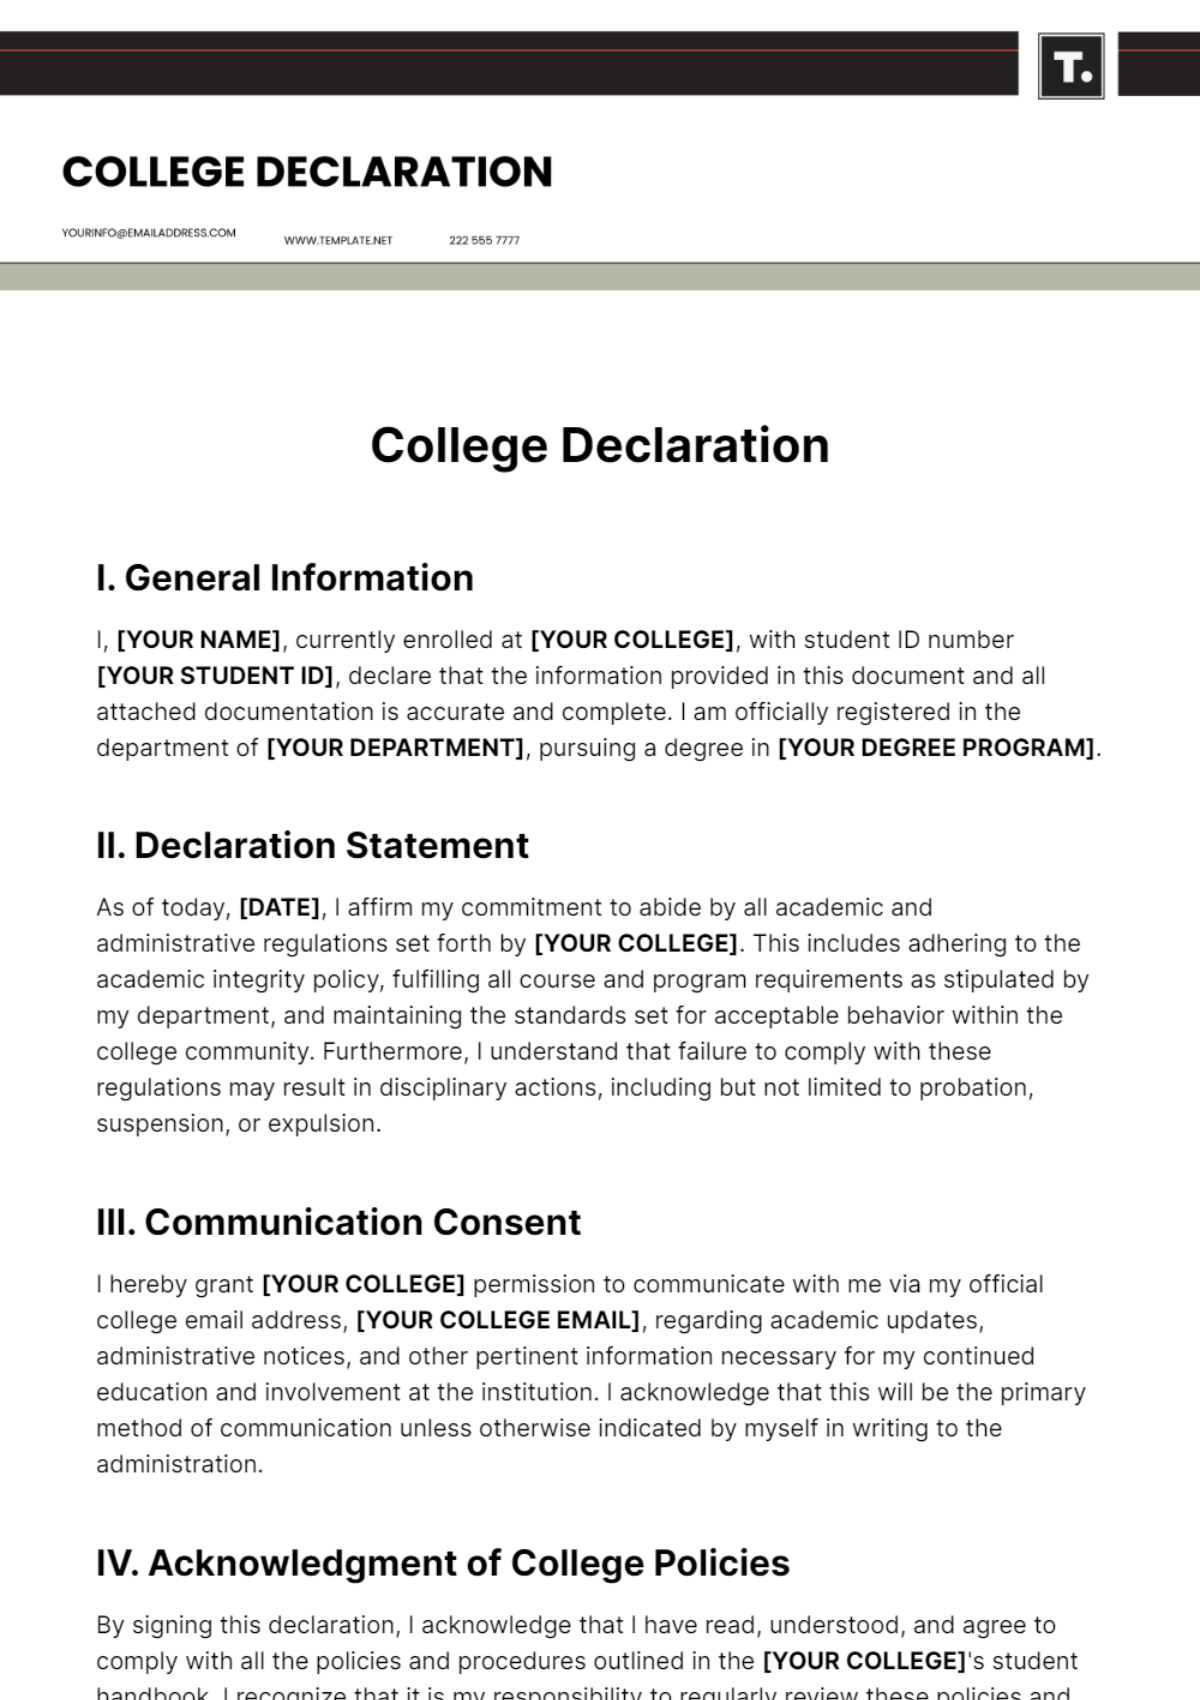 Free College Declaration Template